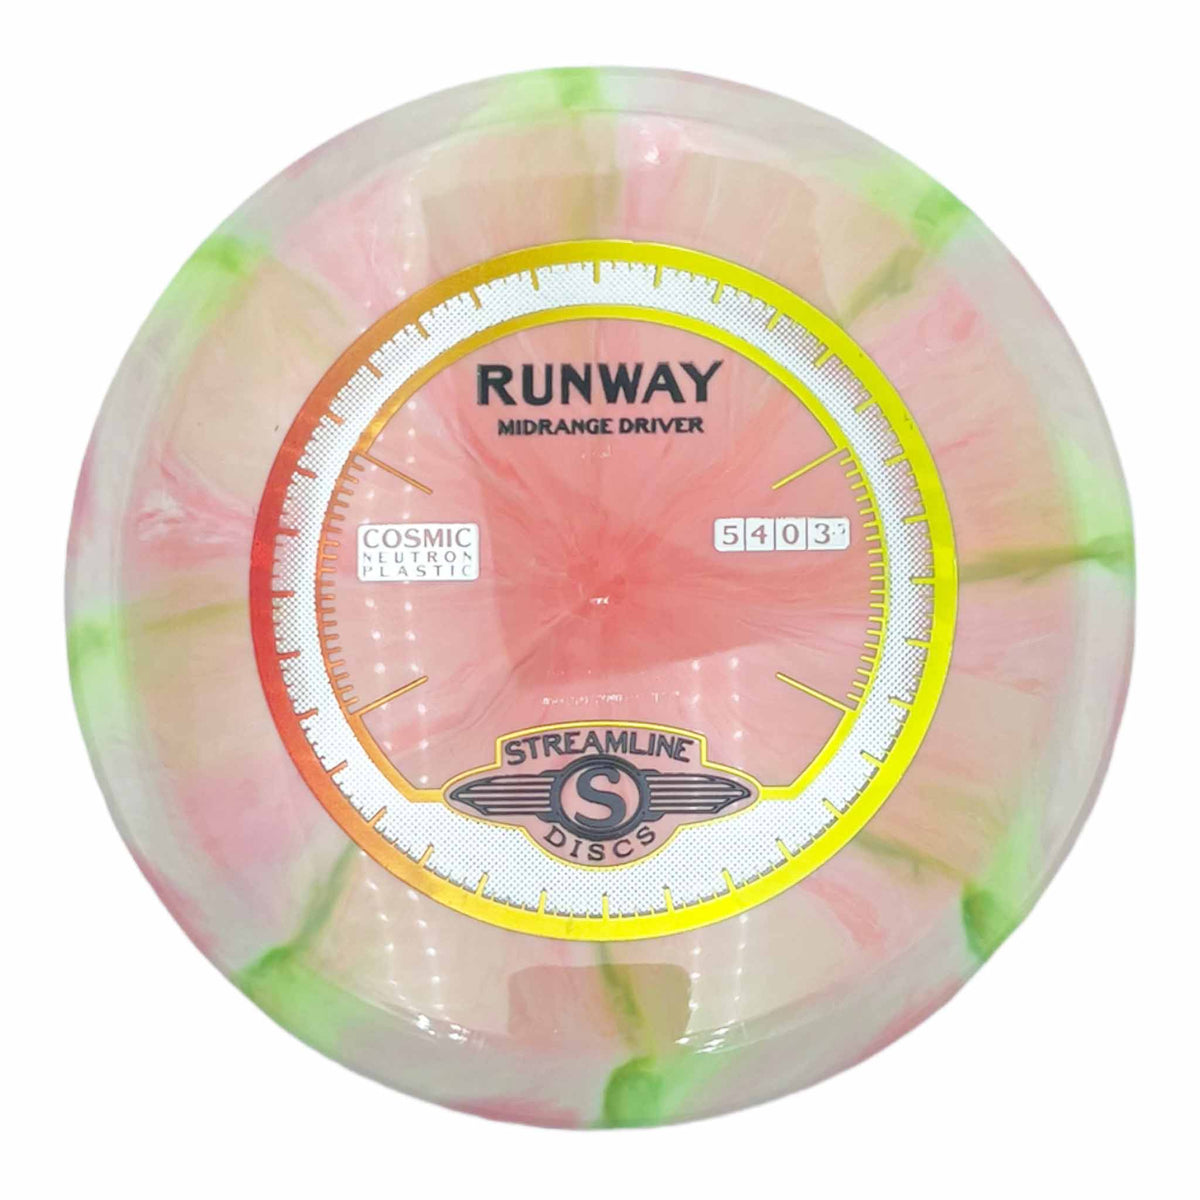 Streamline Discs Cosmic Neutron Runway midrange - Light Pink